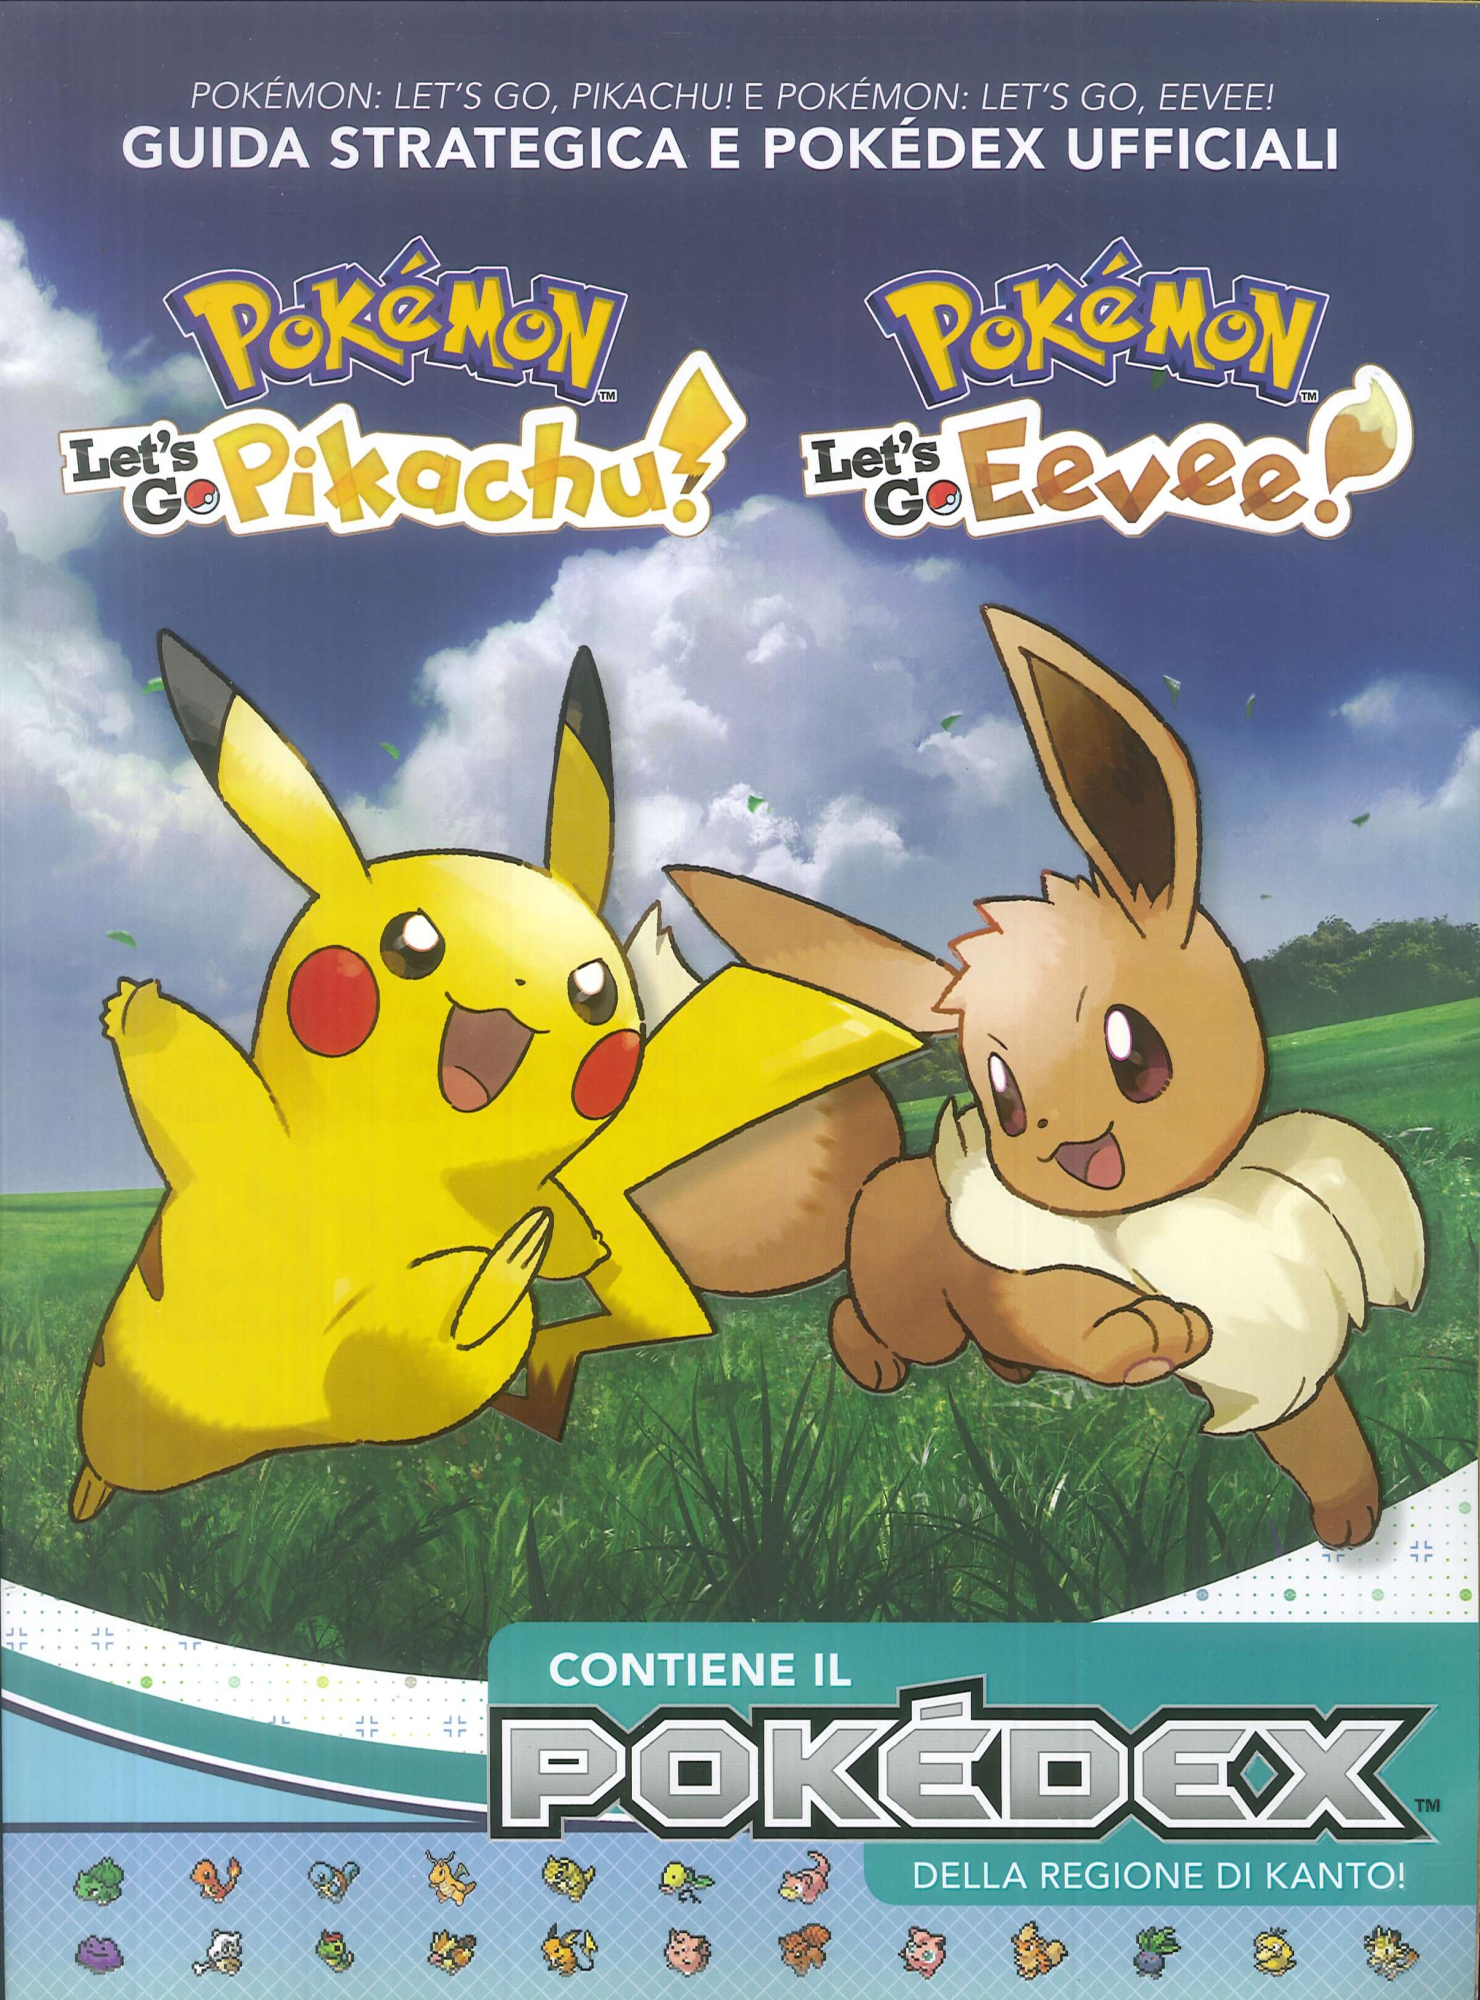 Pokemon - Let's Go Pikachu! / Let's Go Eevee! - La Guida Strategica -  Volume Unico - Multiplayer Edizioni - Italiano - MyComics